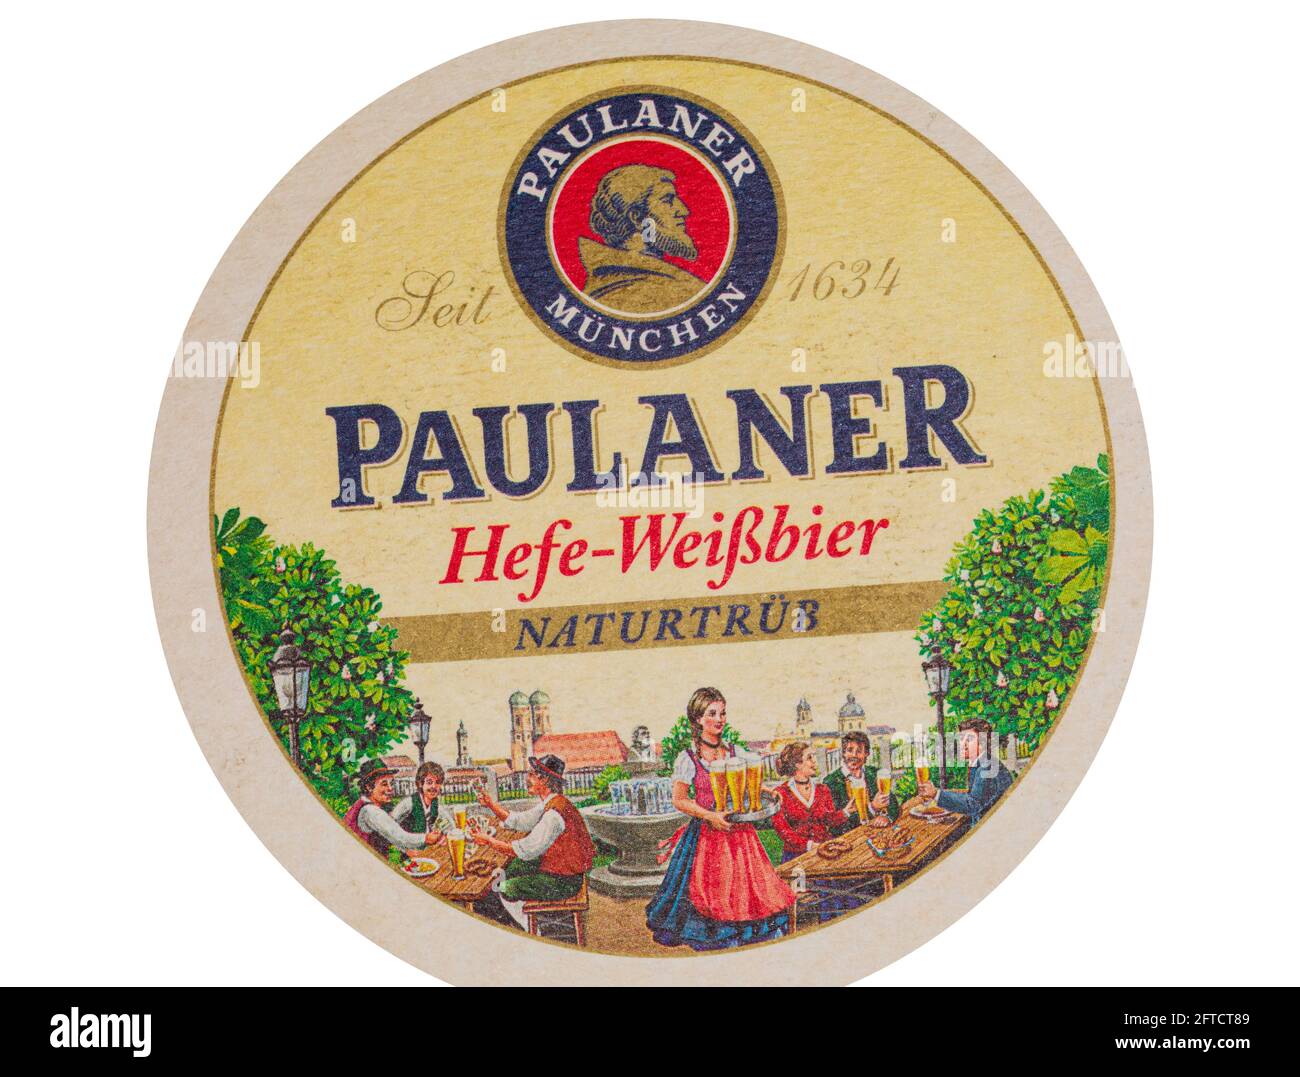 Paulaner Hefe Weissbier Munchen, German brewery Beermat, cut out on white. Stock Photo